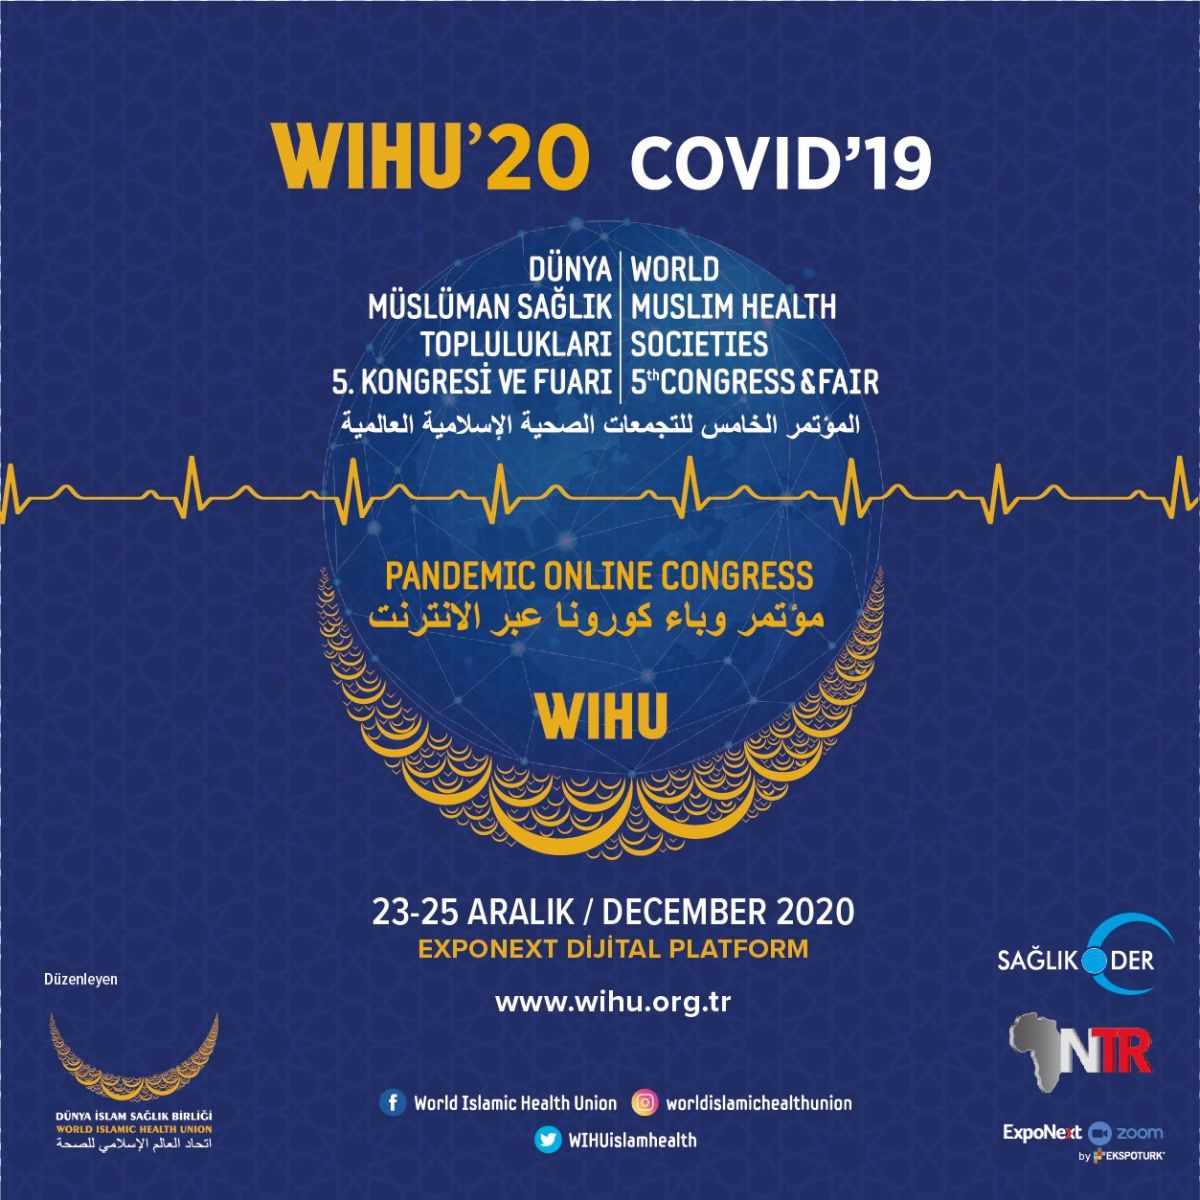 WIHU'20 REGISTRATIONS